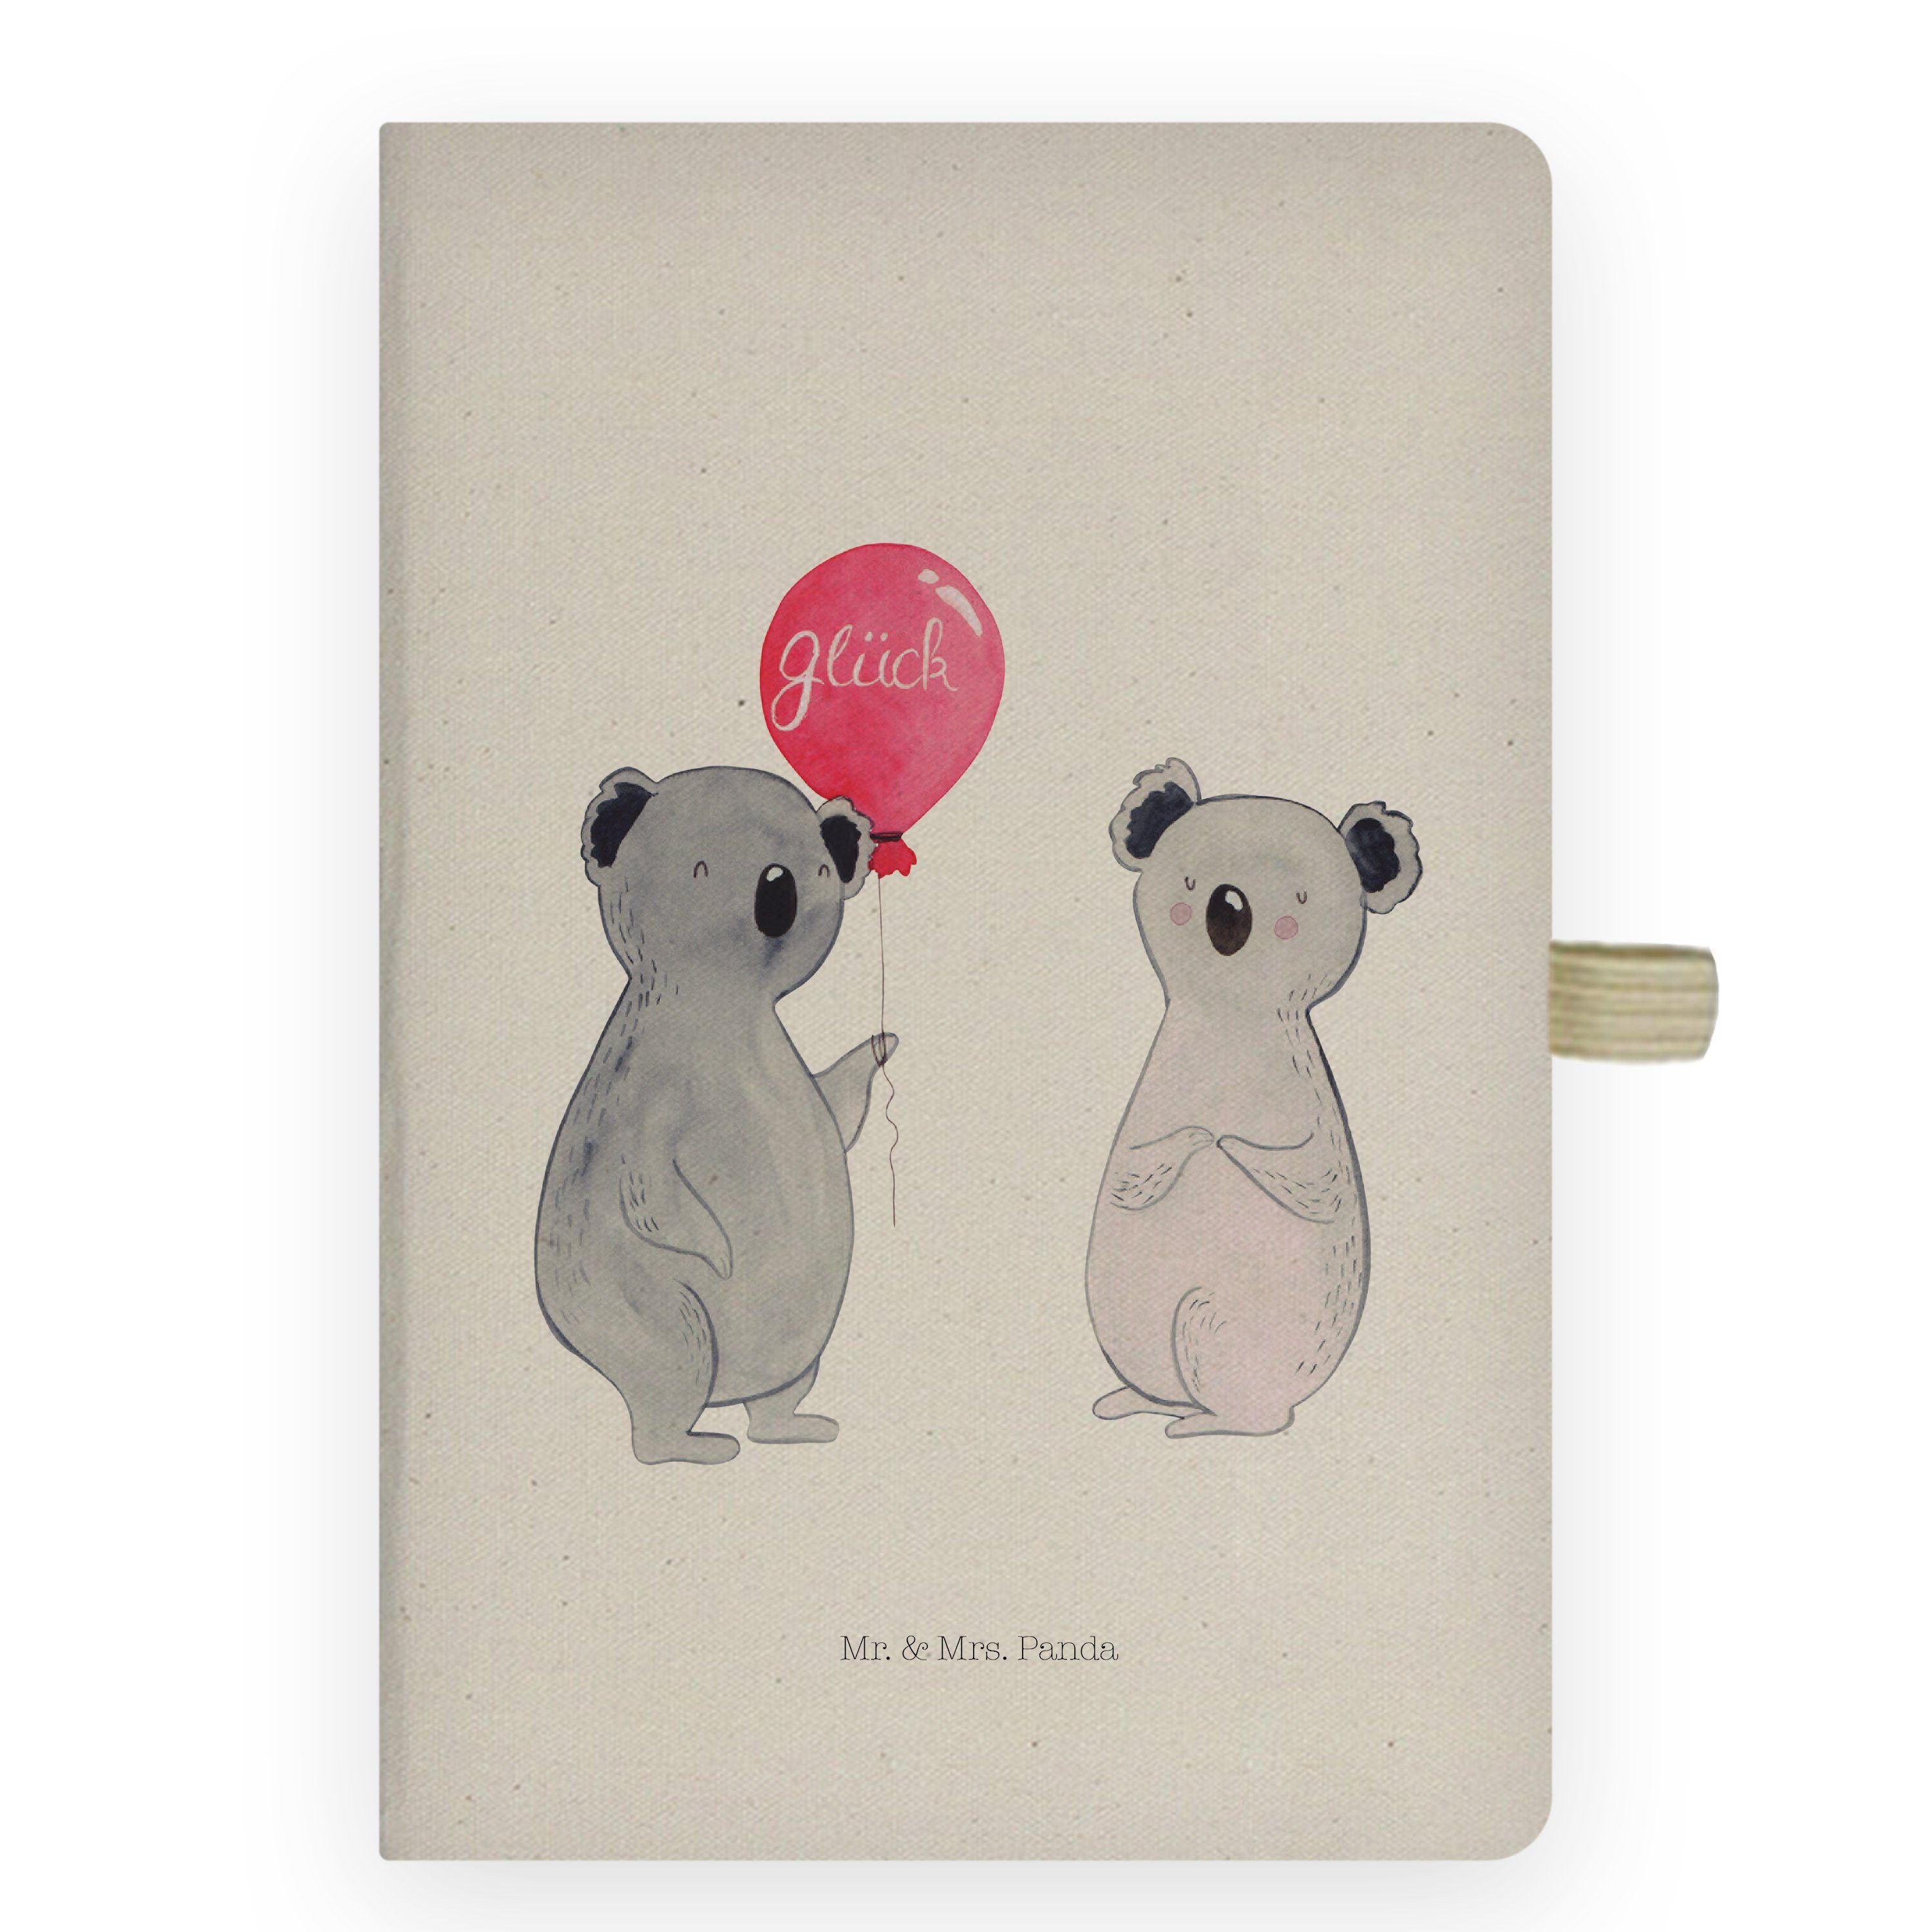 Mr. & Mrs. Panda Notizbuch Koala Luftballon - Transparent - Geschenk, Notizen, Koalabär, Kladde, Mr. & Mrs. Panda